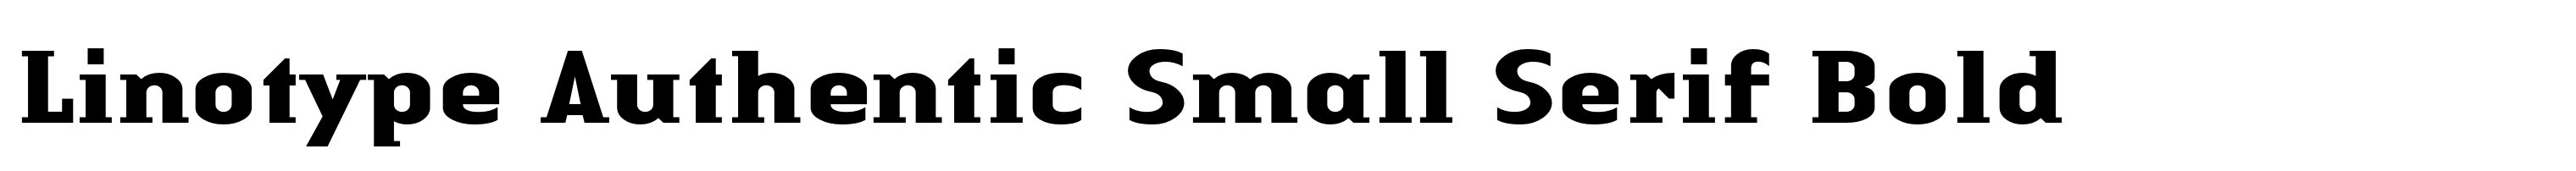 Linotype Authentic Small Serif Bold